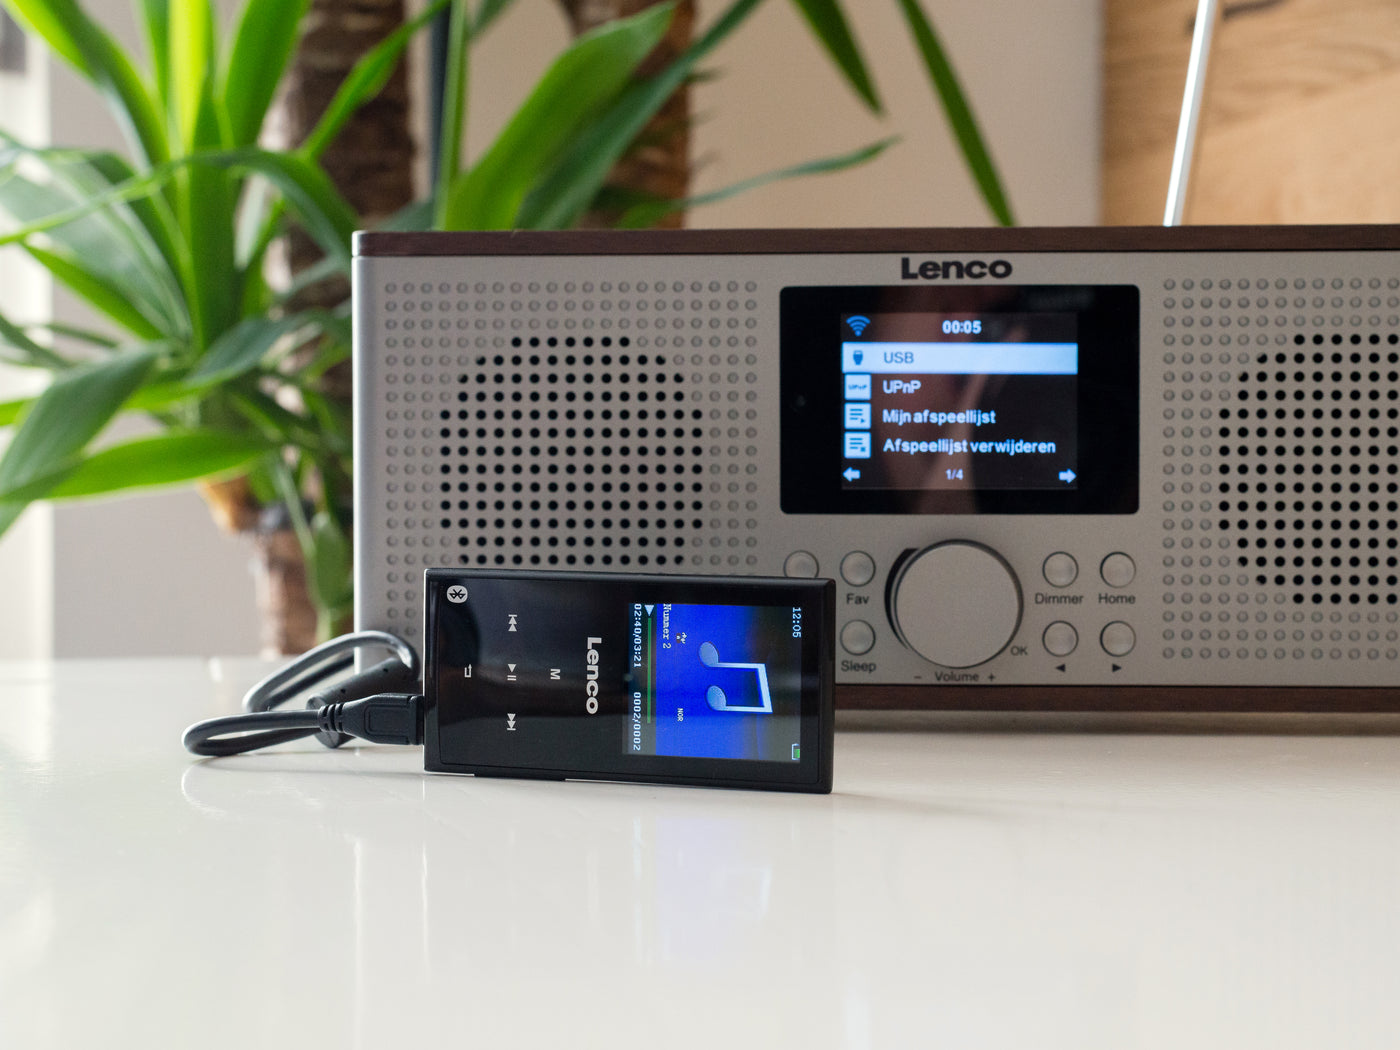 LENCO DIR-170WA Smart Internet radio, with DAB+, FM and Bluetooth® - Wood